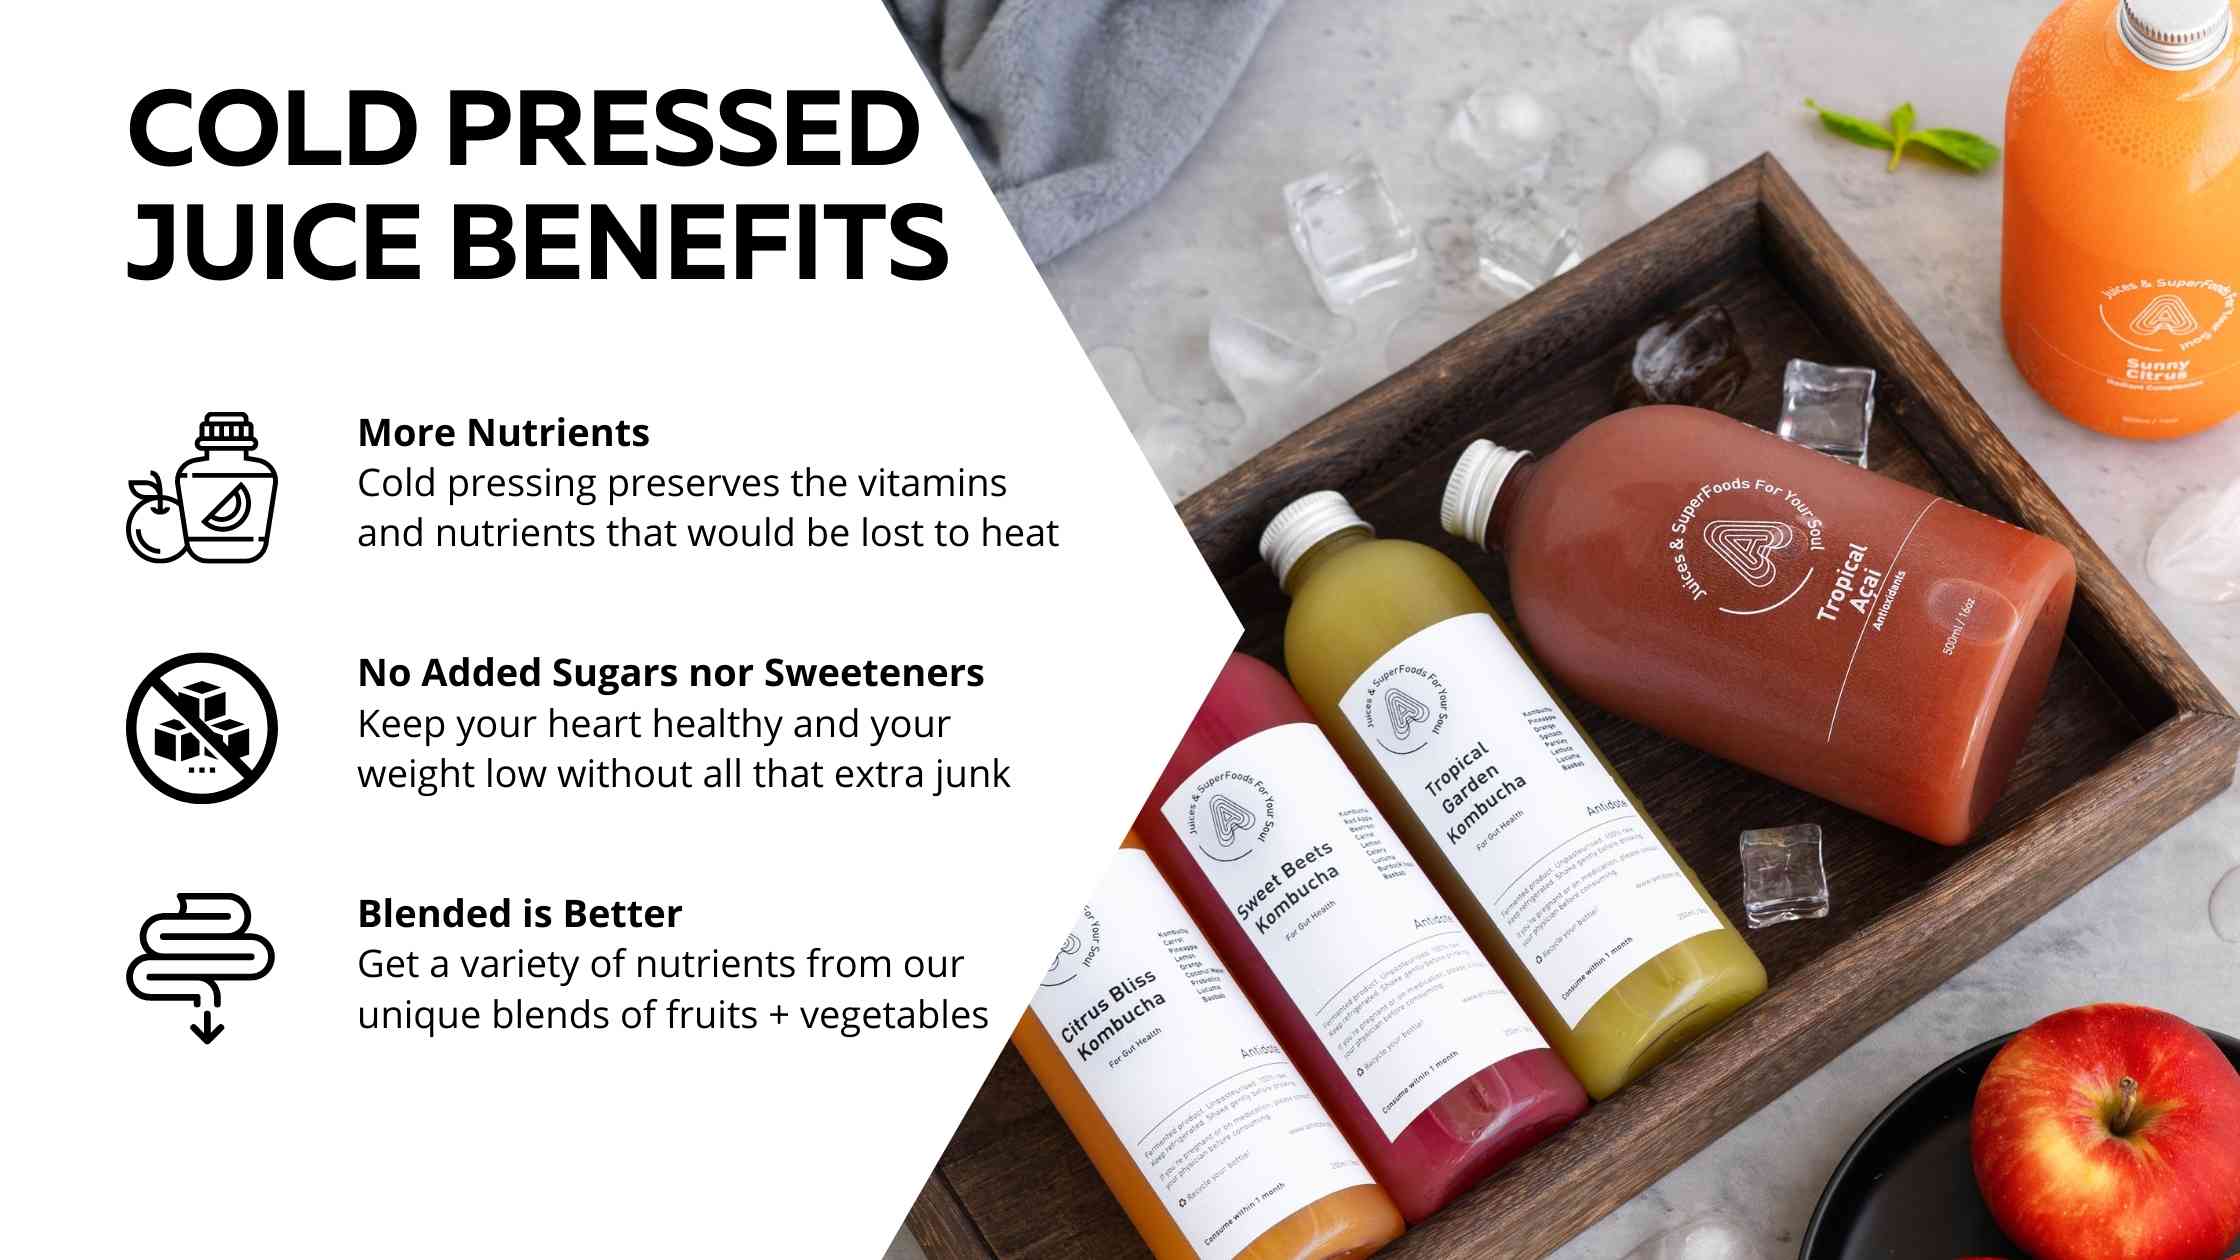 Cold Pressed Juice Benefits